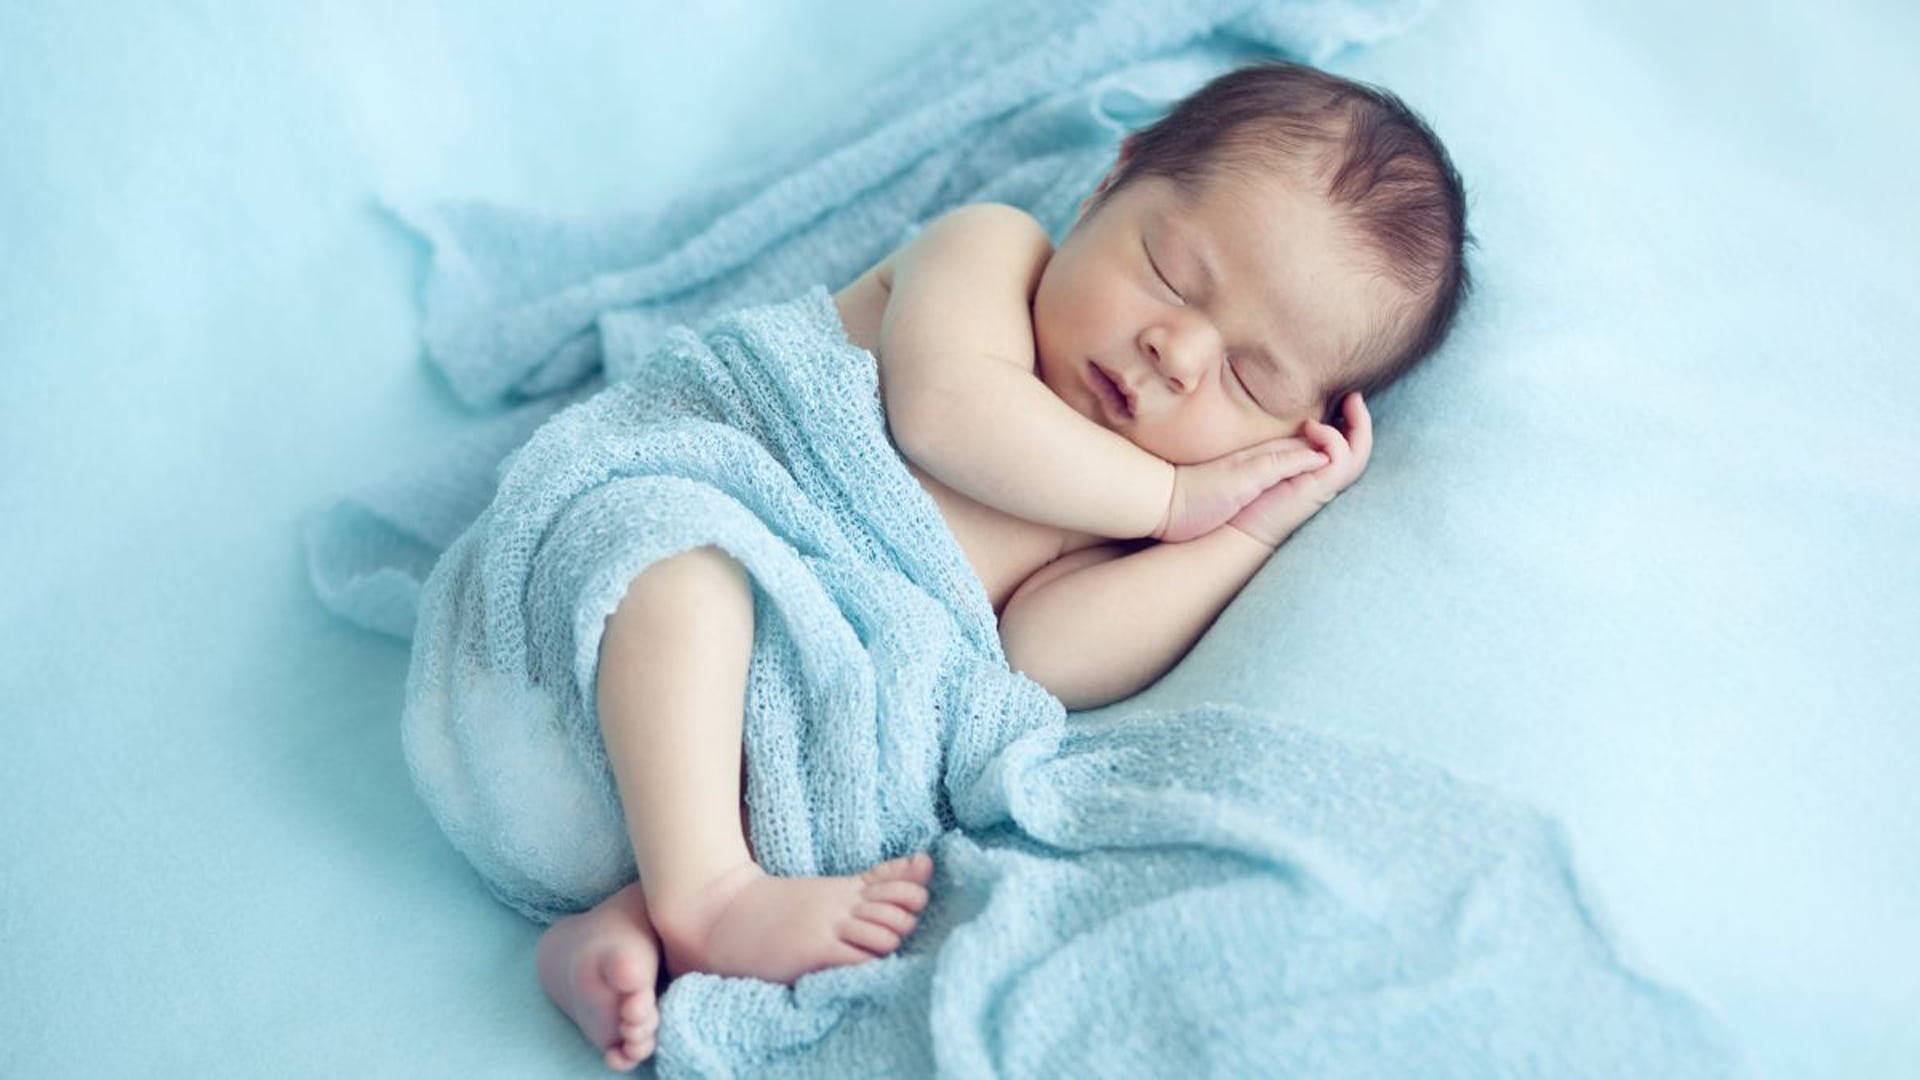 Free Very Cute Baby Wallpaper Downloads, [100+] Very Cute Baby Wallpapers  for FREE 